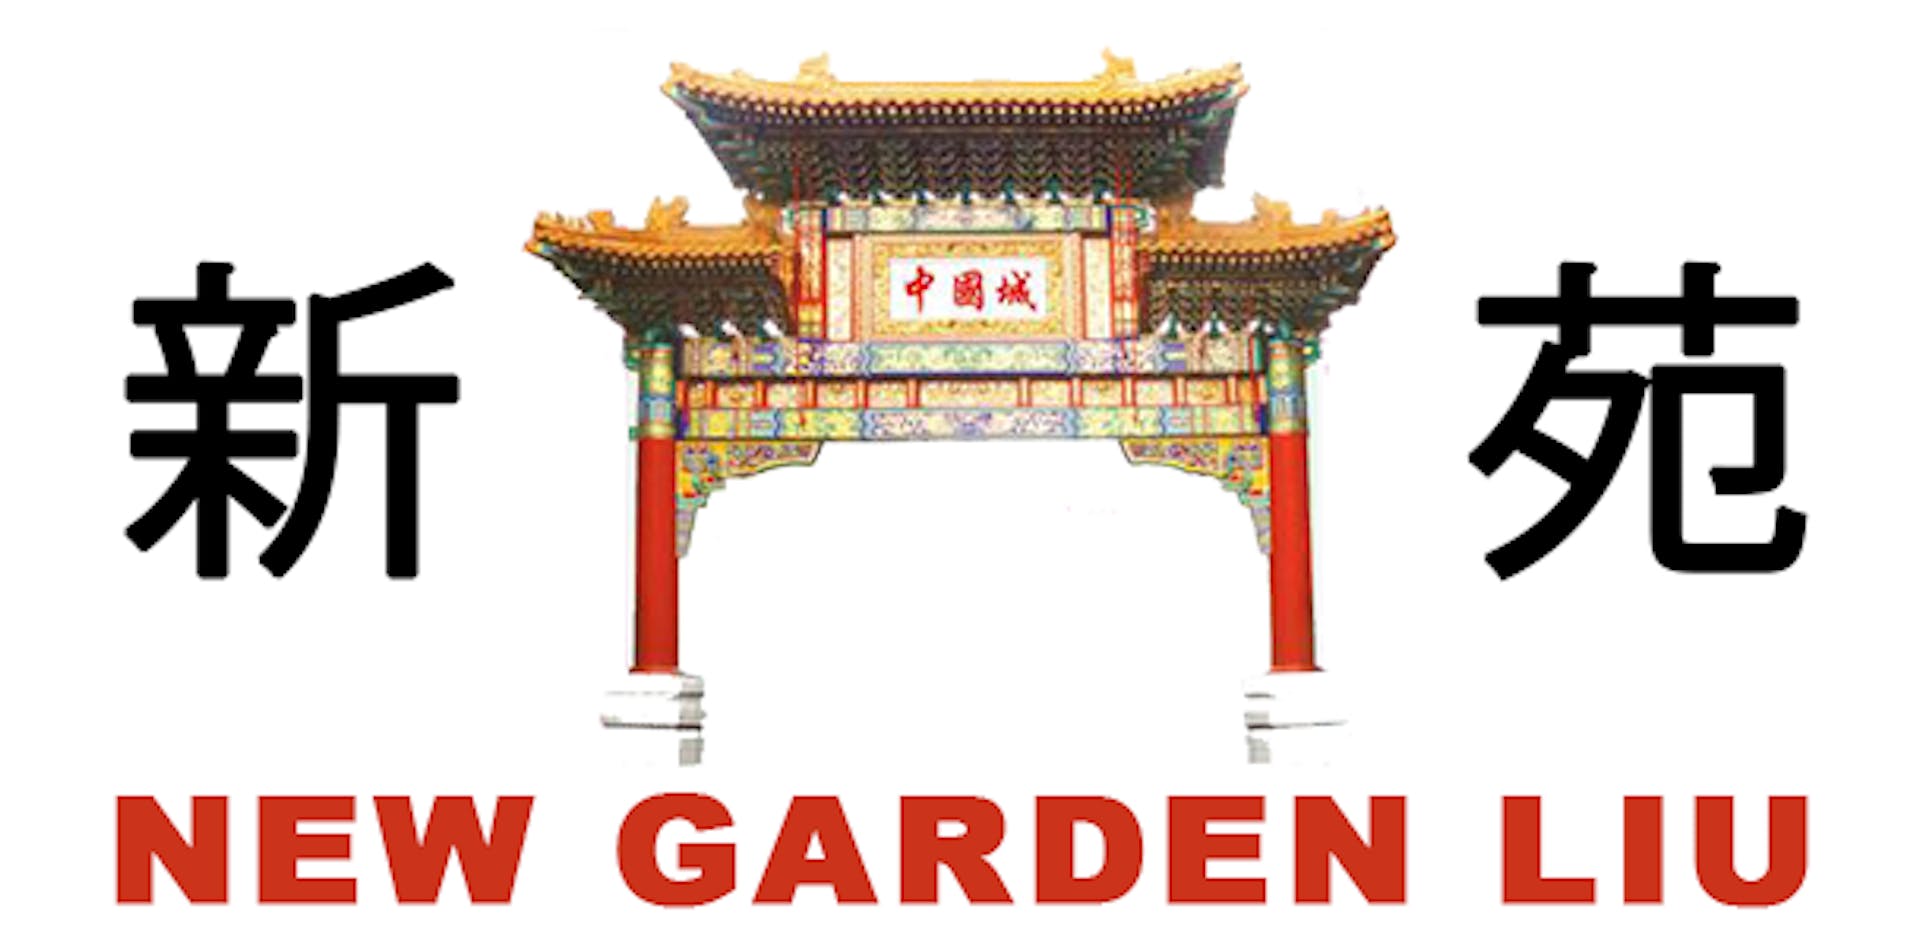 New Garden Liu Cheltenham Pa 19012 Menu Order Online